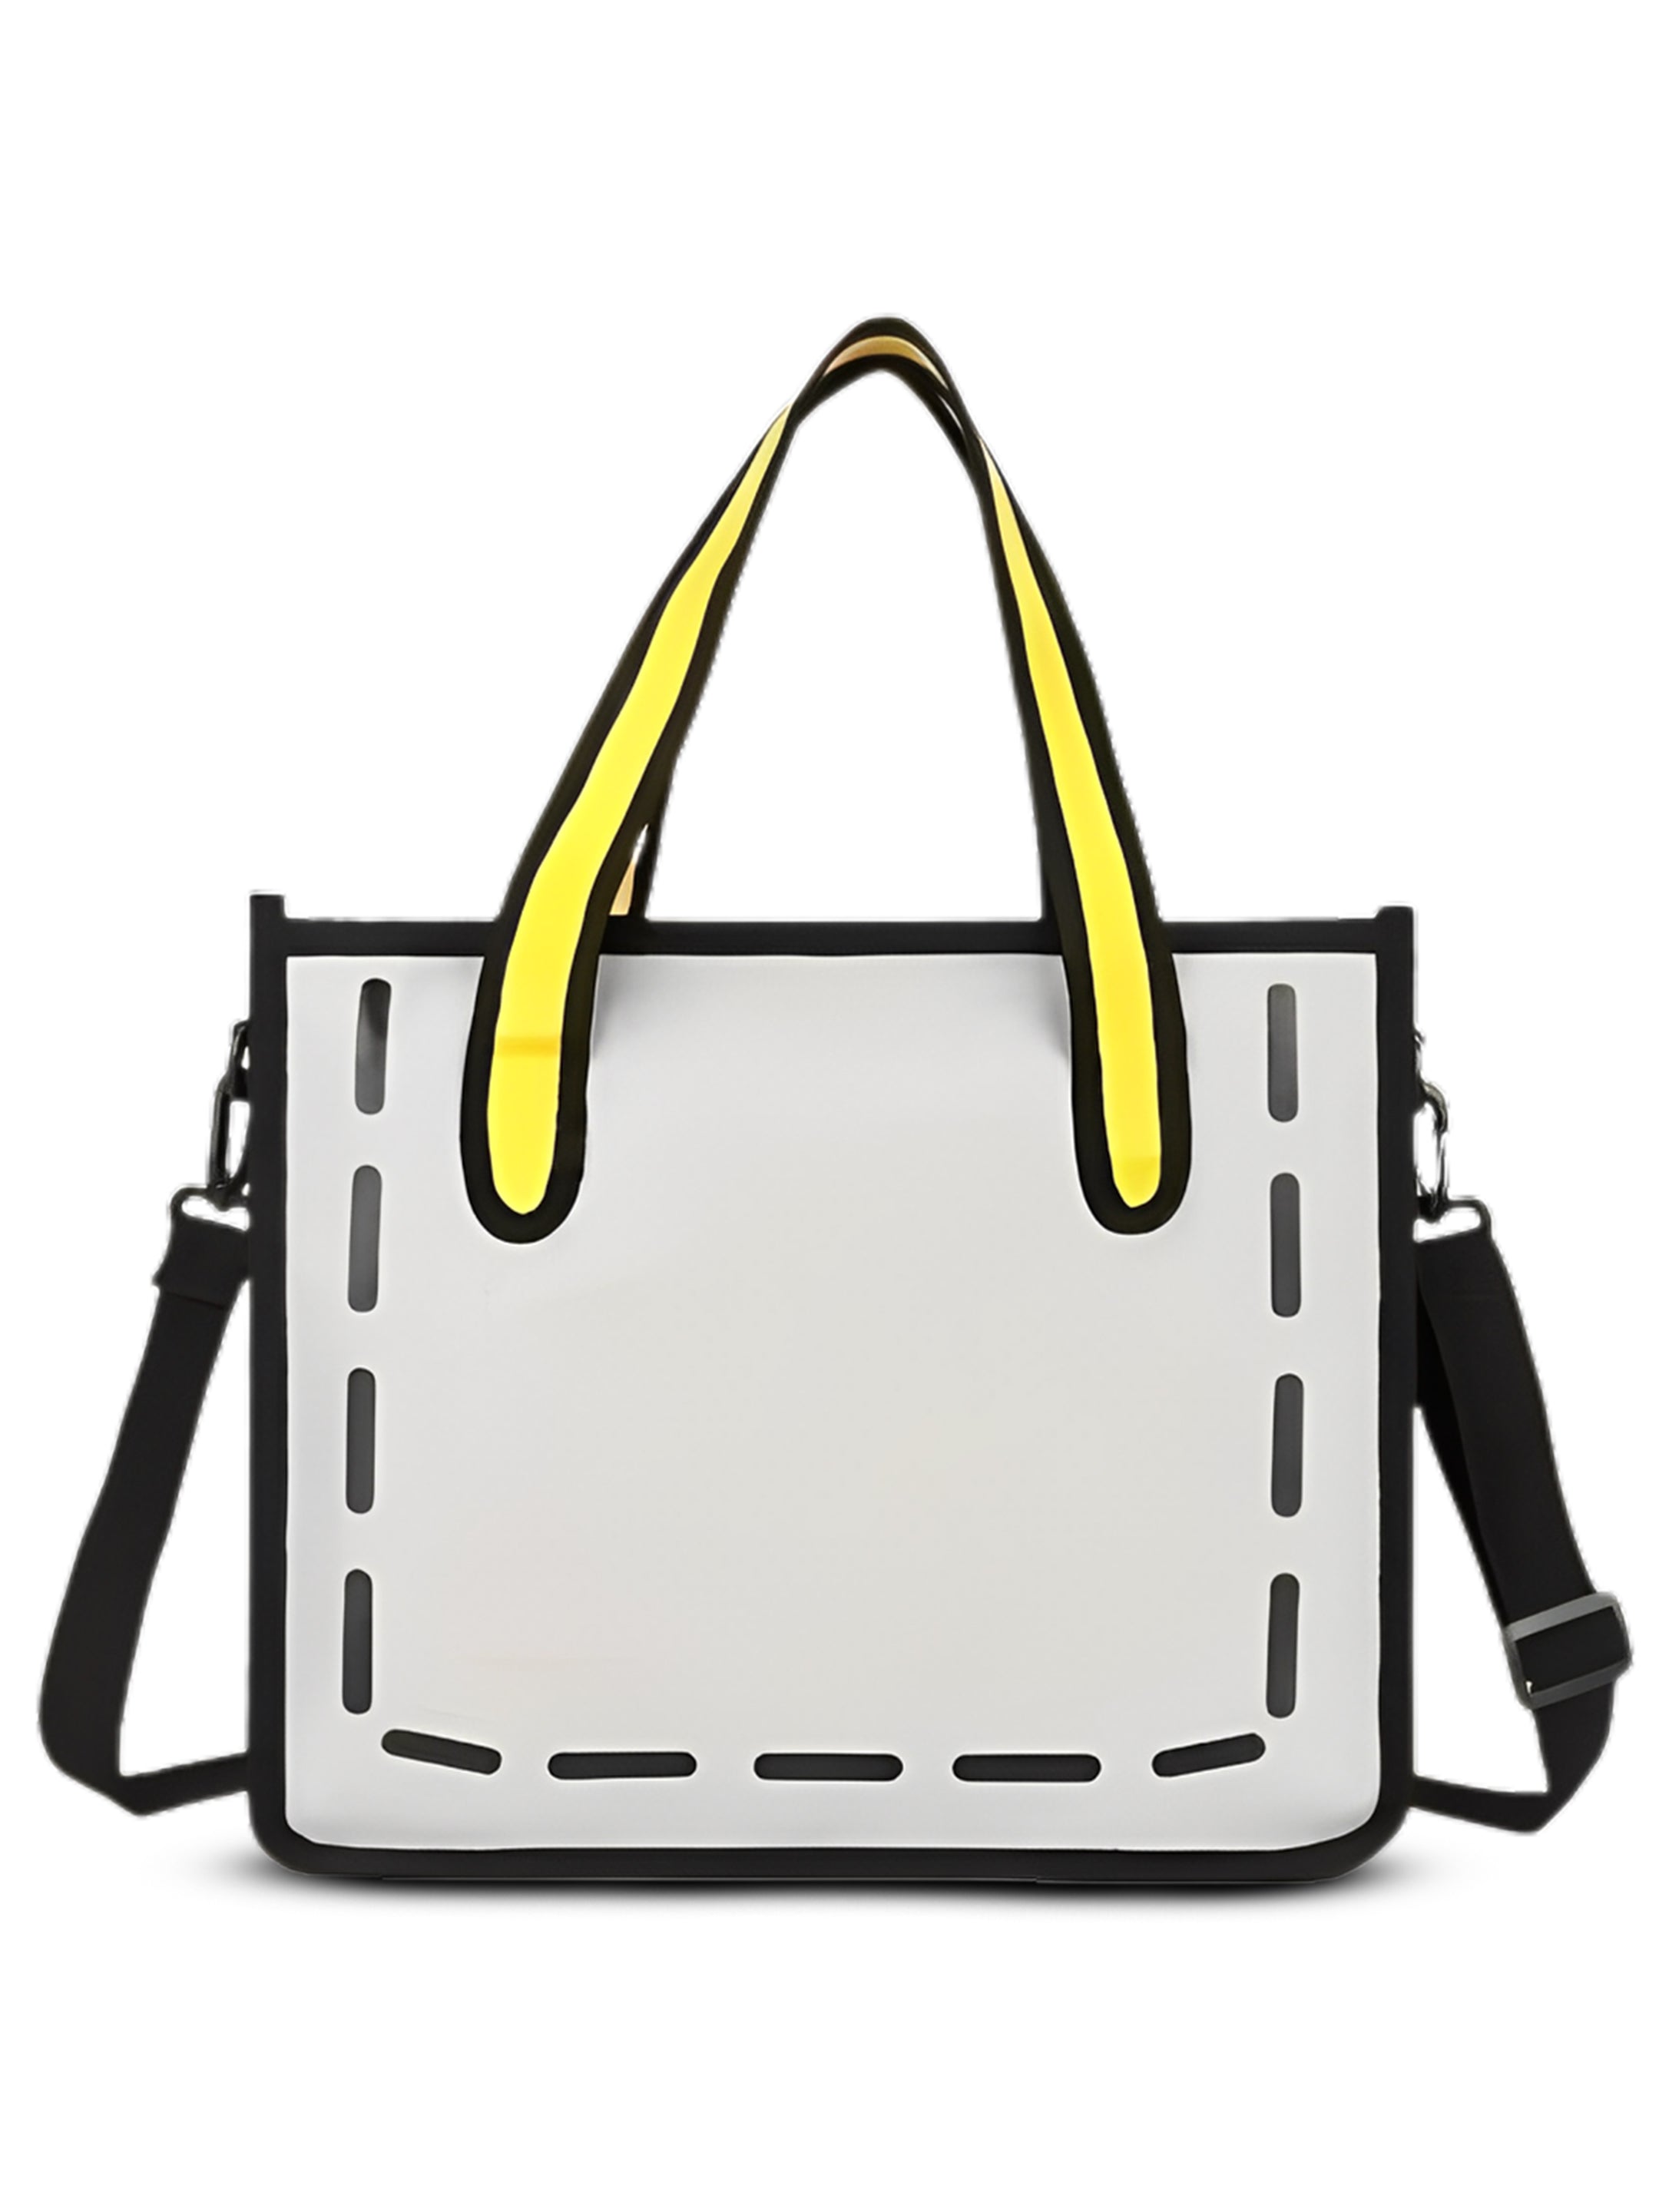 Women Shoulder Bag 2D Bags Comic Handbag Casual Fashion Messenger Bags  (Yellow) | eBay